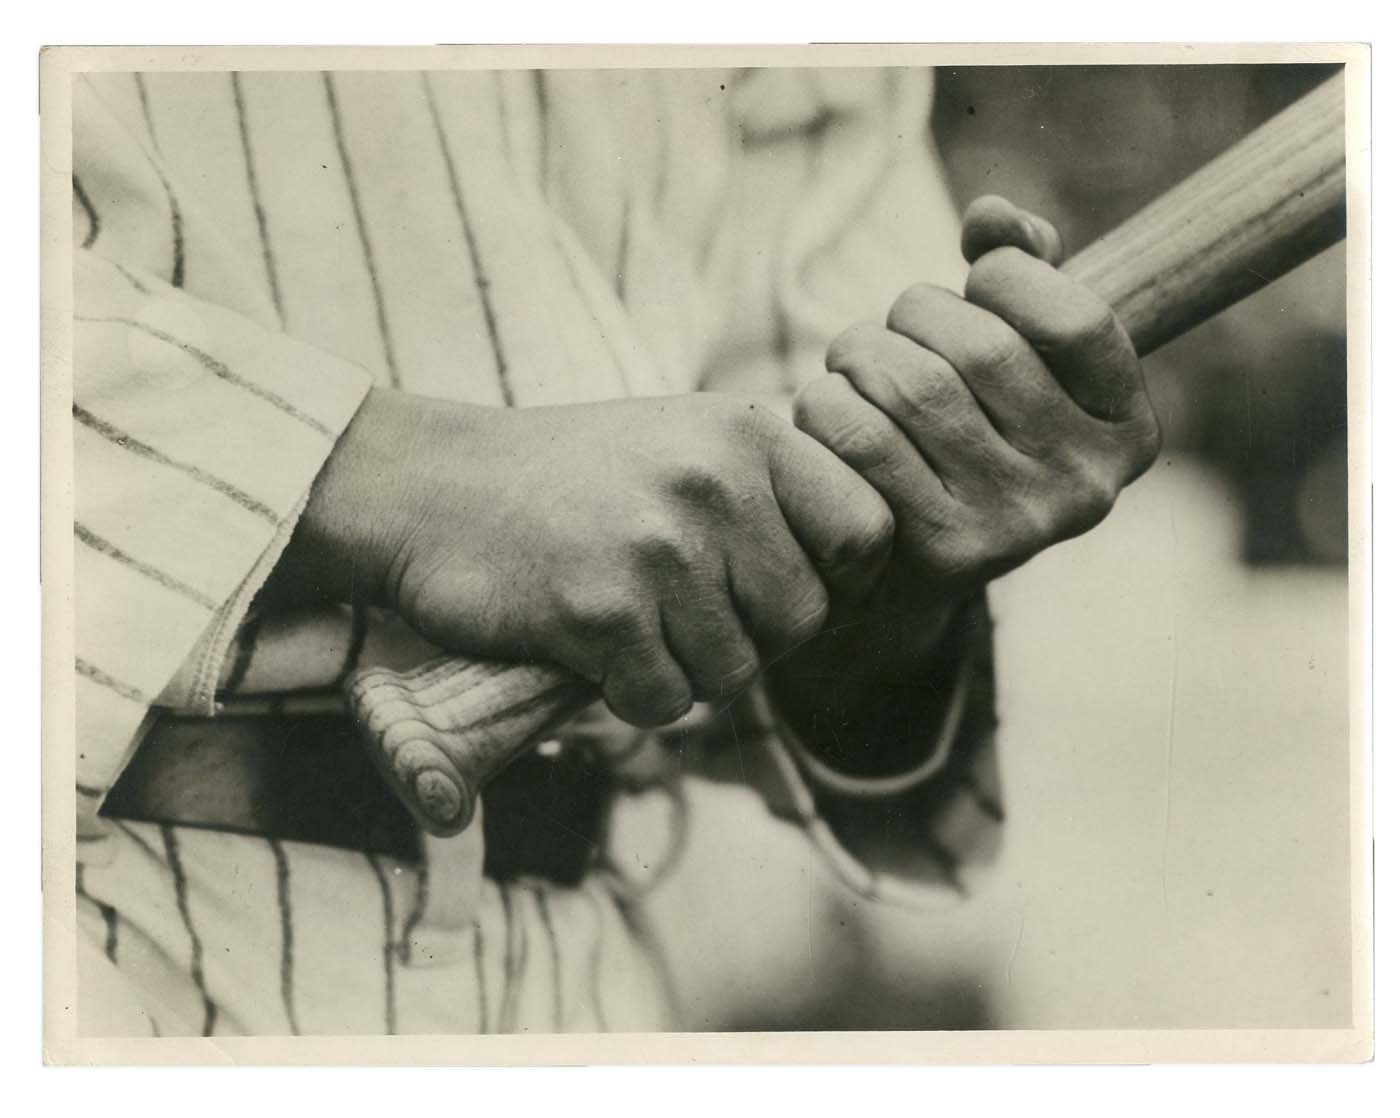 Circa 1927 Lou Gehrig "Batting Hands" Type I Photo by Charles Conlon